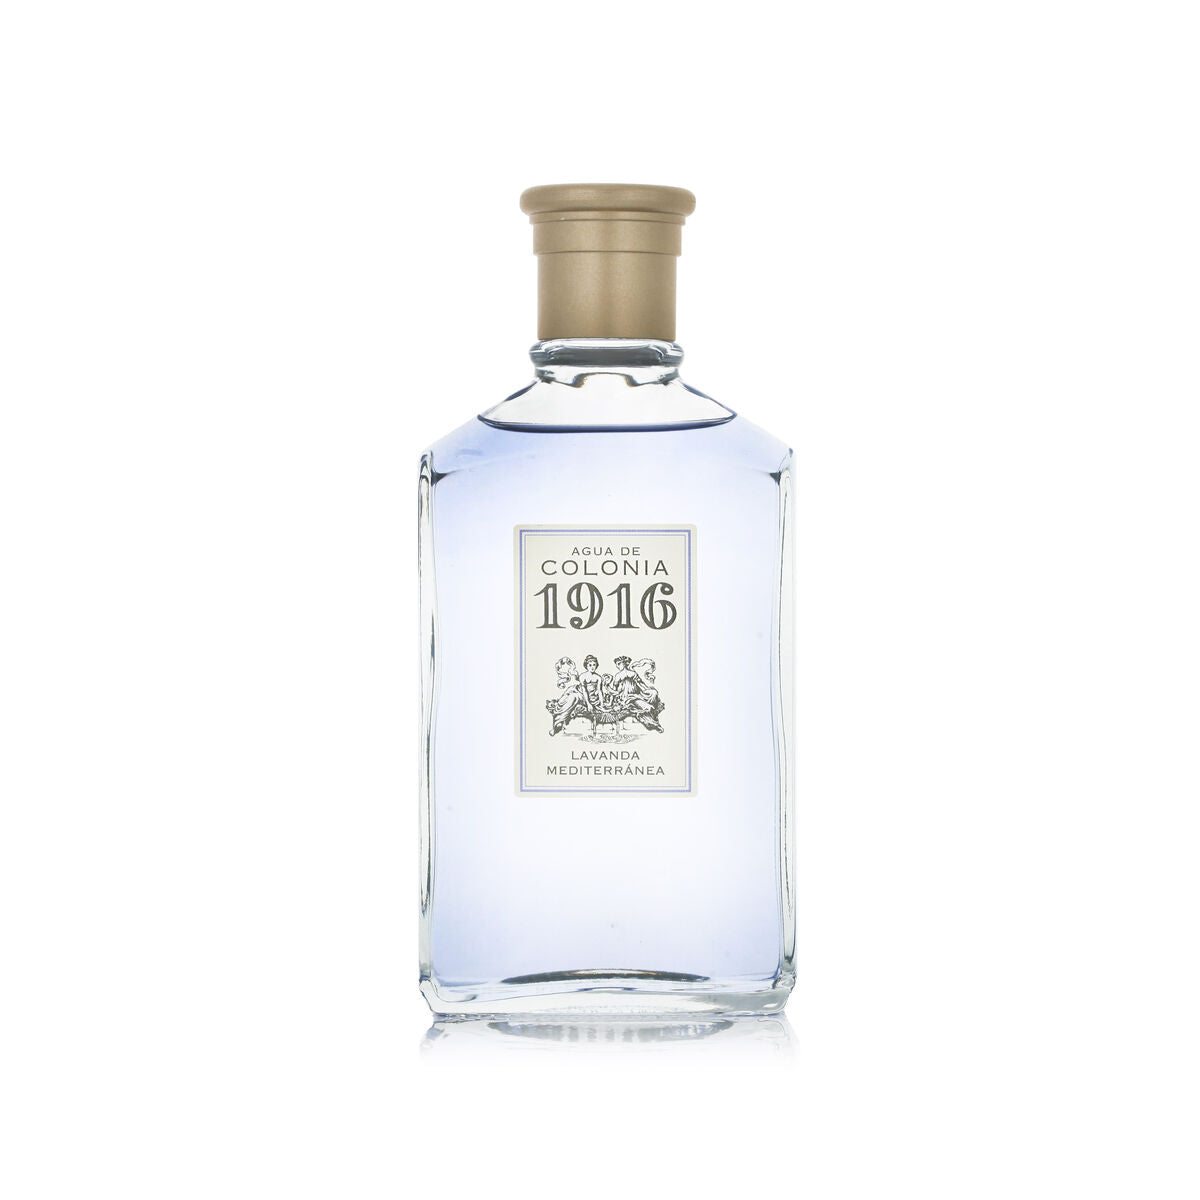 Uniseks Parfum Myrurgia EDC 1916 Agua De Colonia Lavanda Mediterranea 200 ml